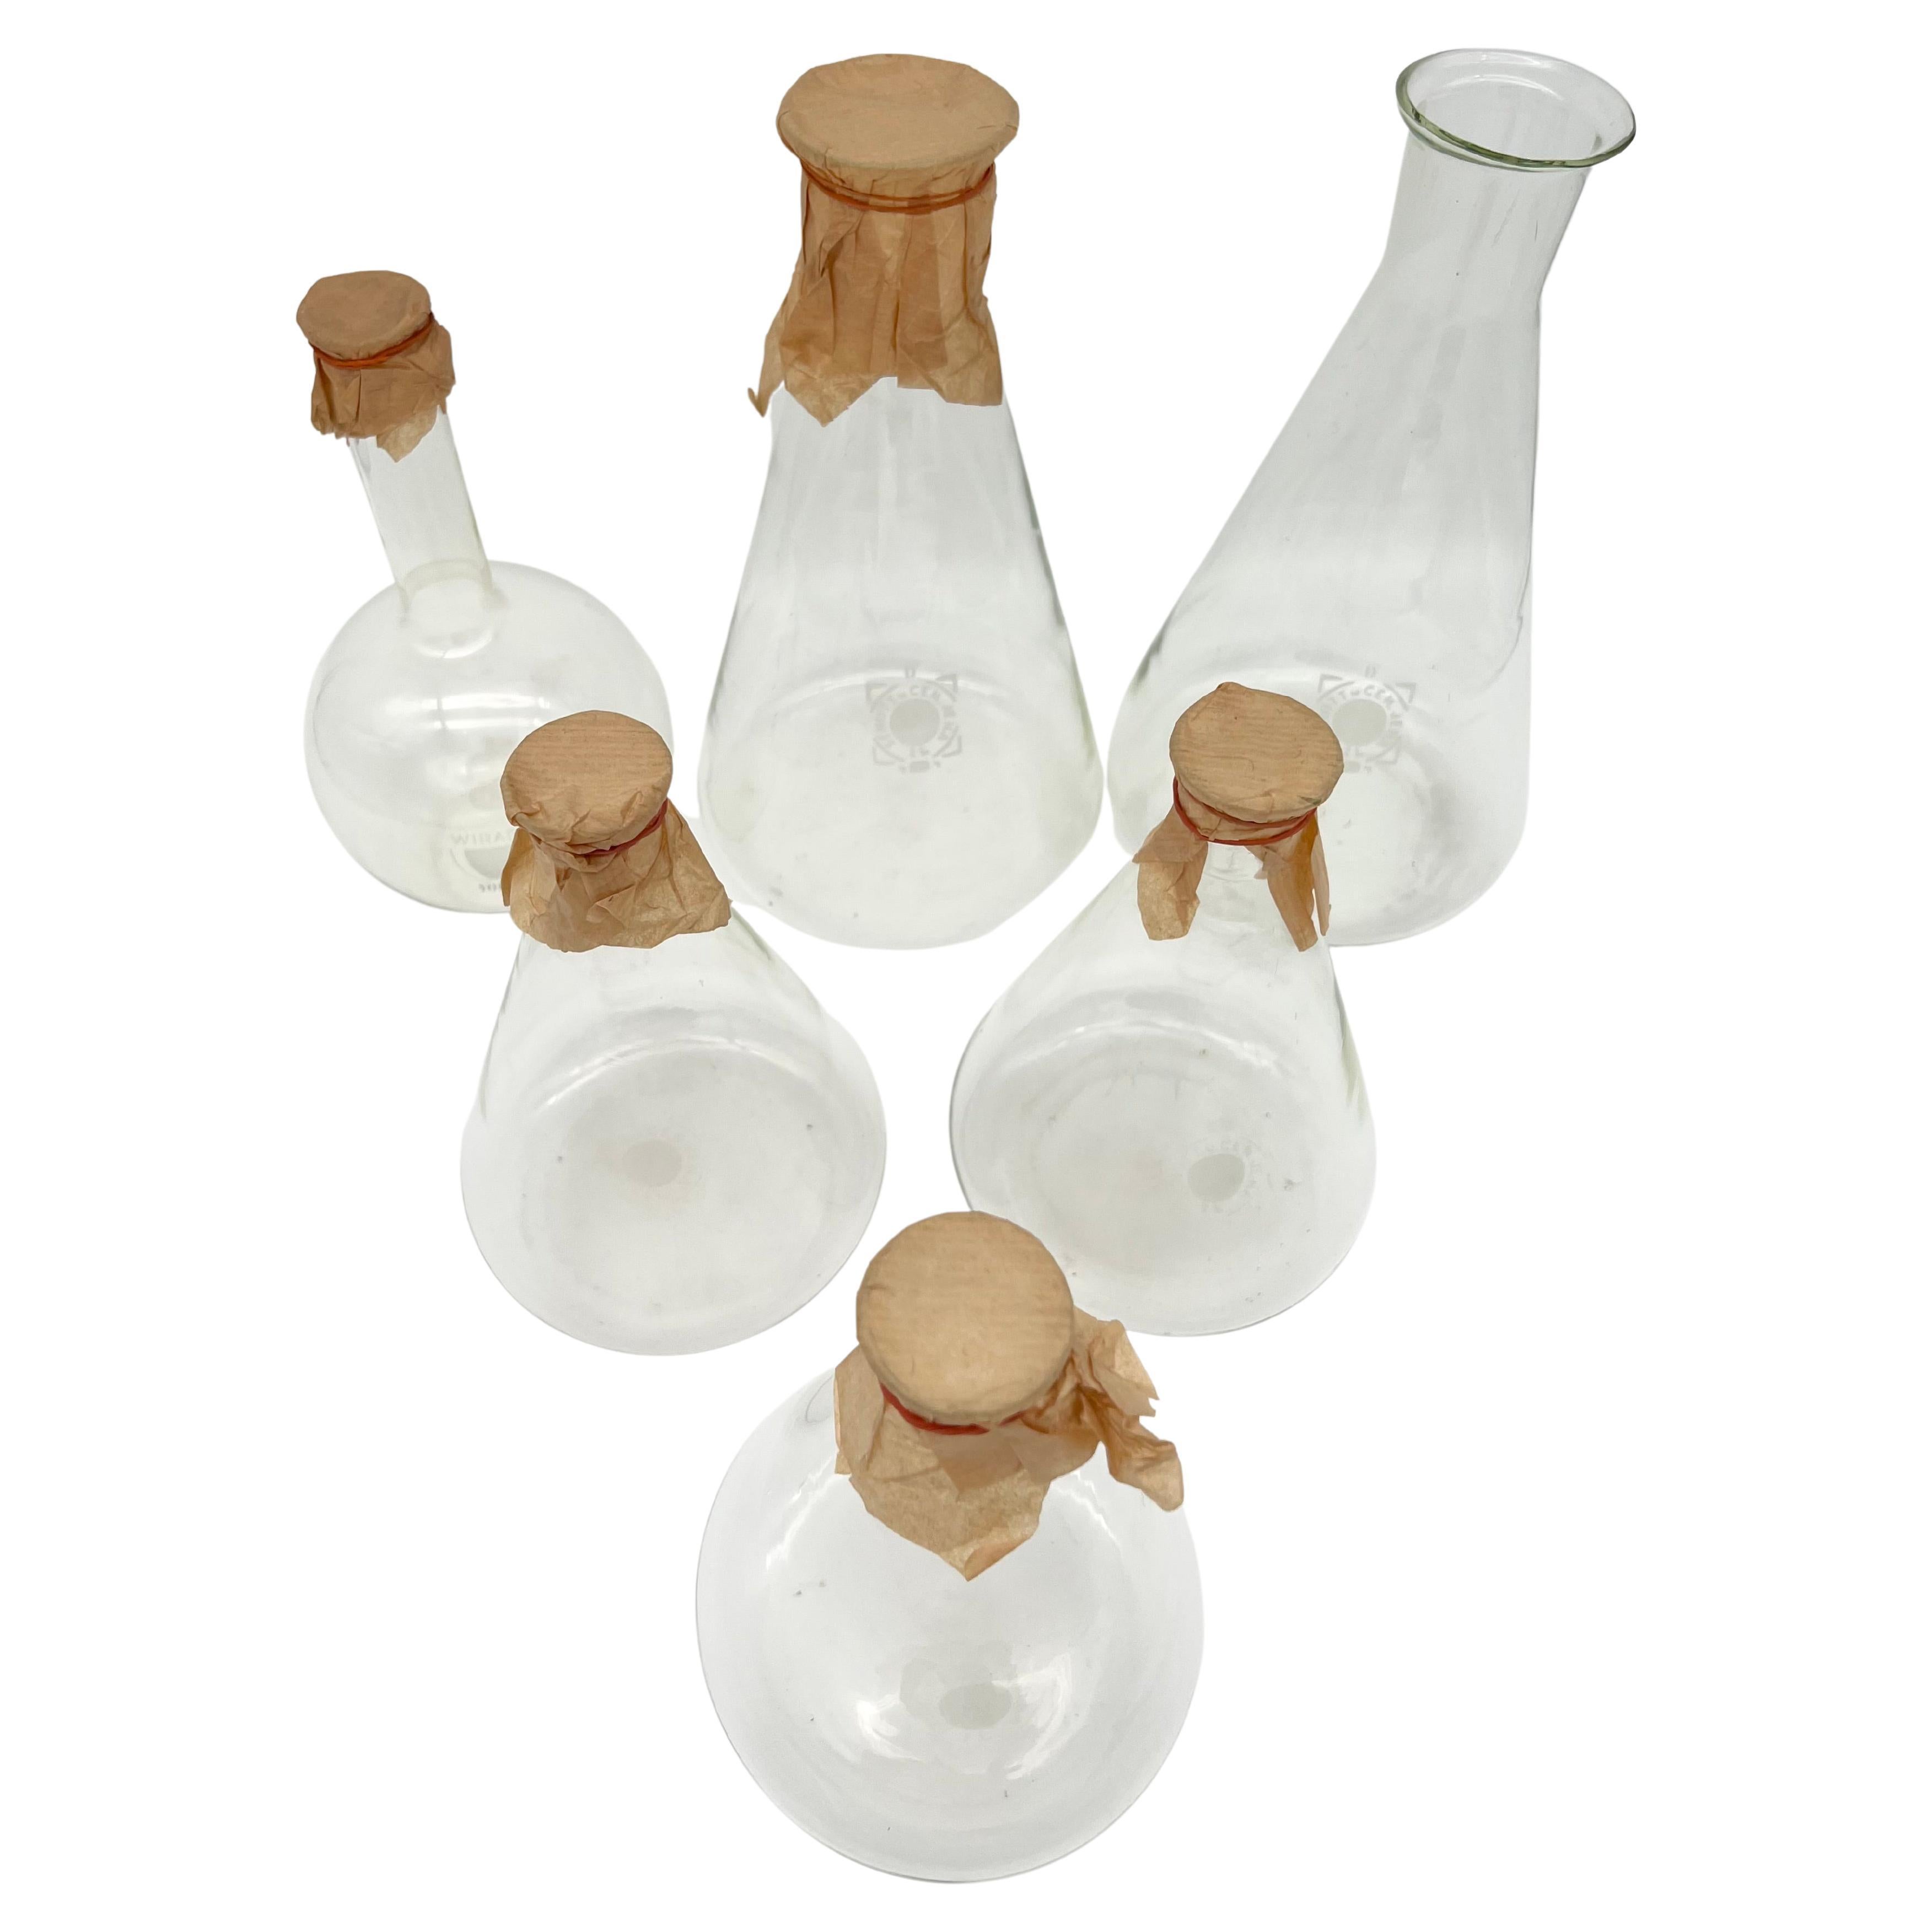 Set of Six Old Pharmacy Glass Bottles, Germany around 1900